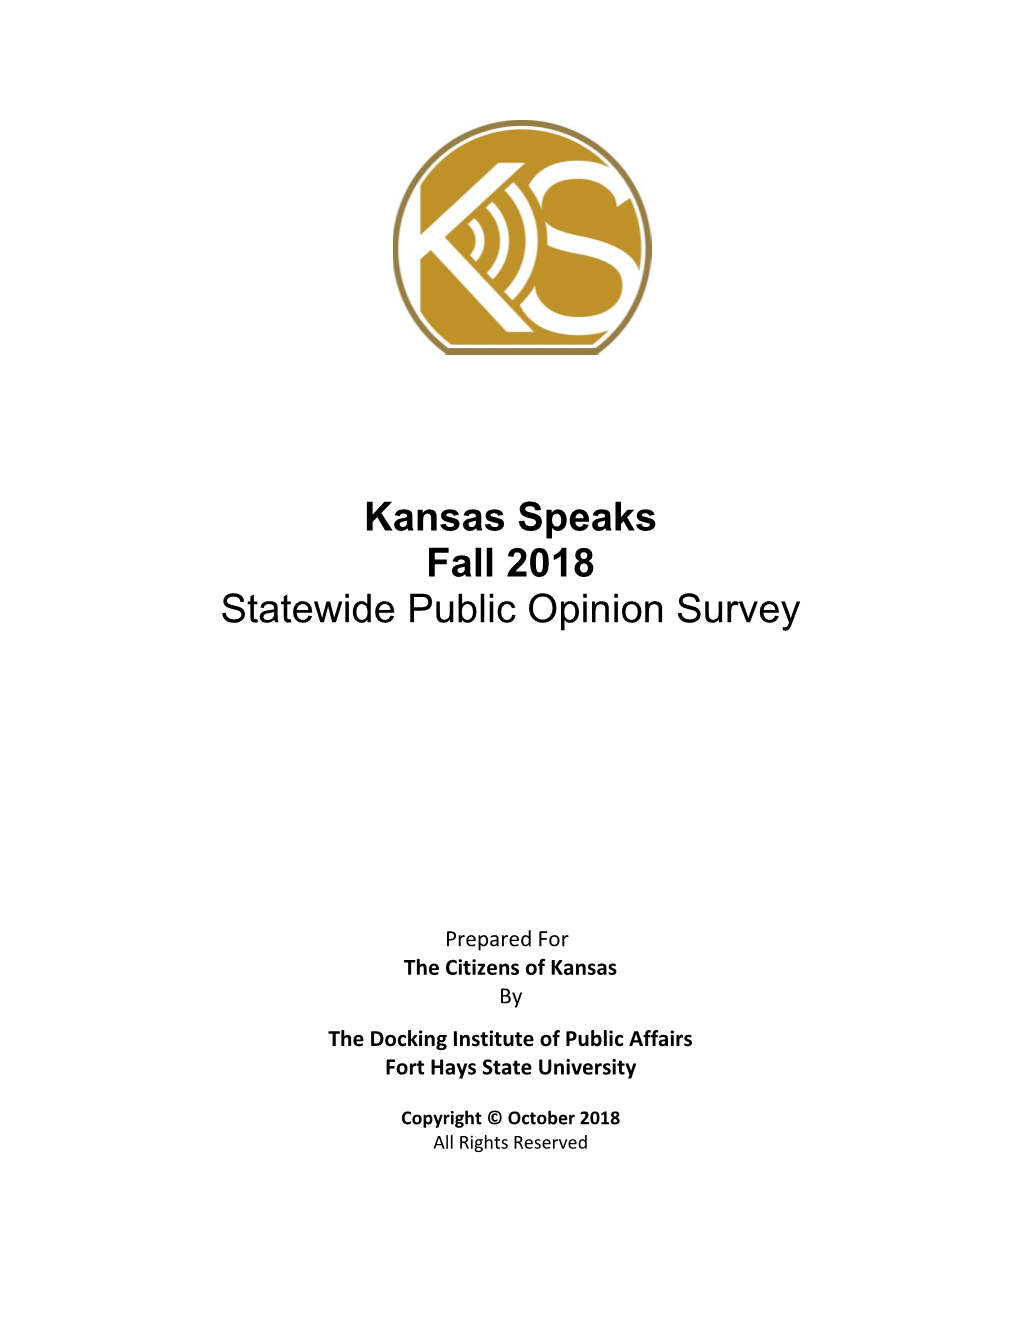 Kansas Speaks Fall 2018 Statewide Public Opinion Survey